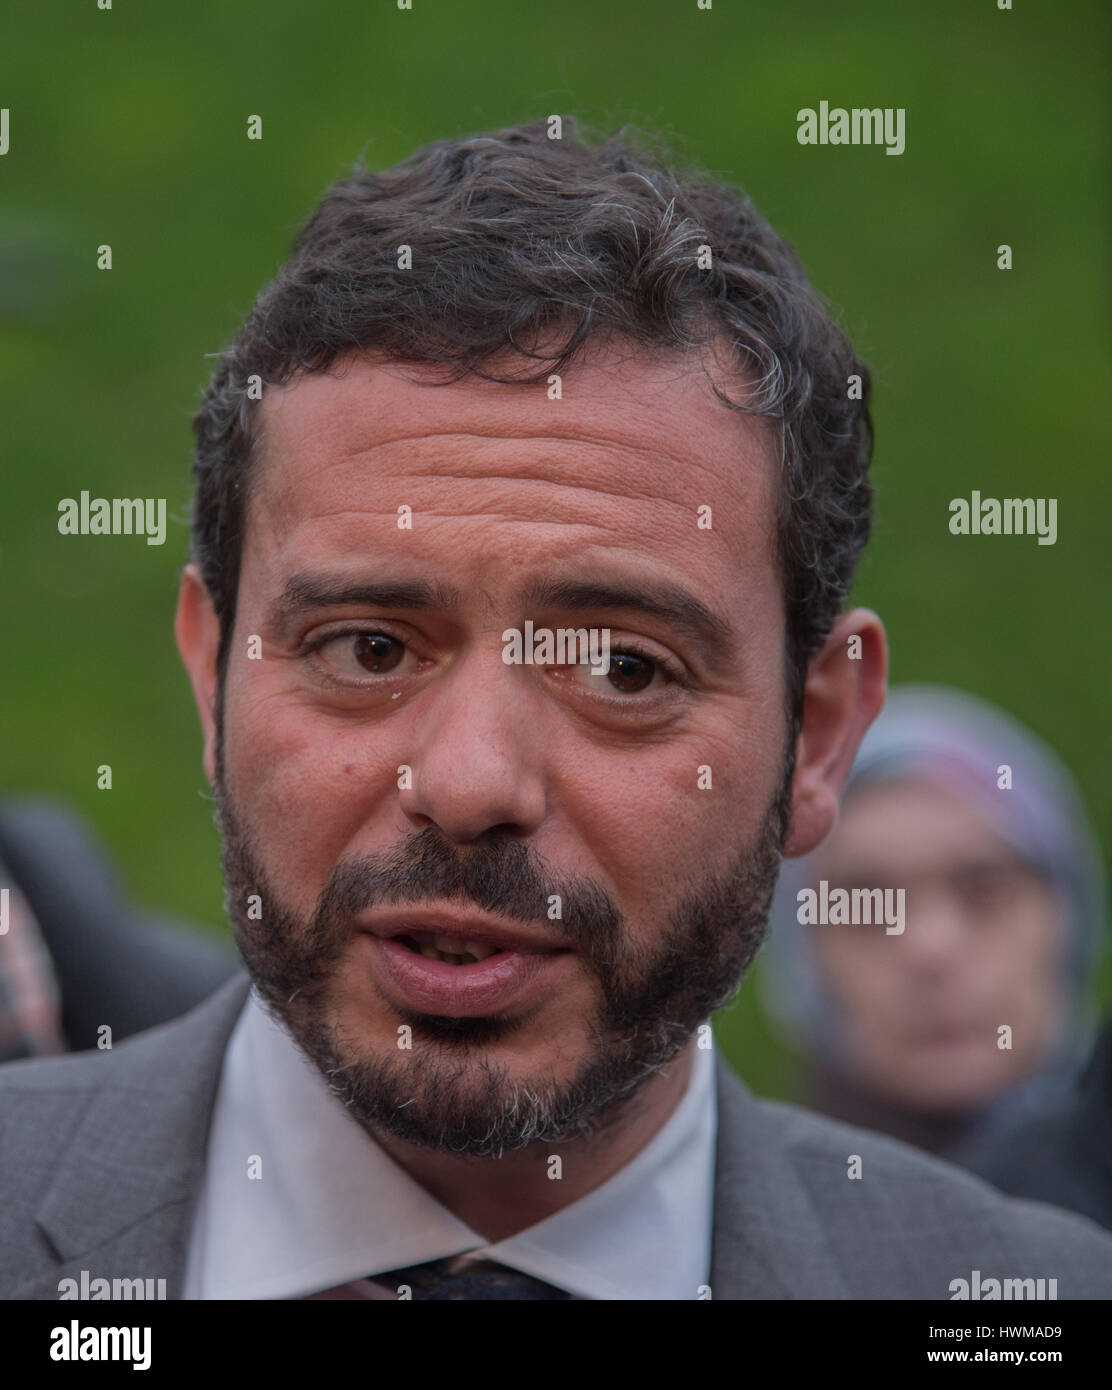 Parigi - Razzy Hammadi - politico francese. Foto Stock